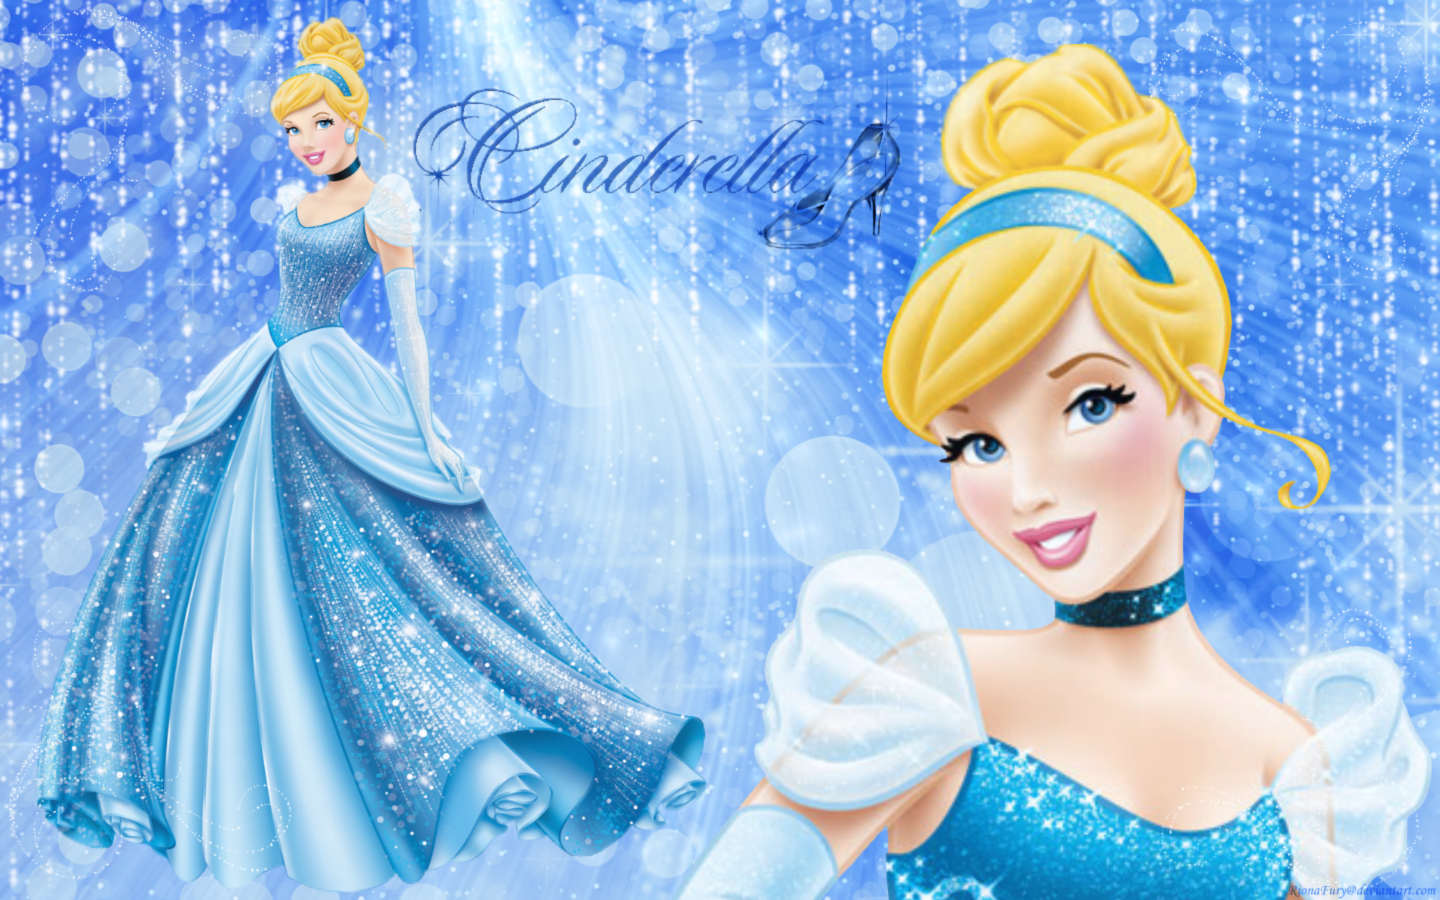 Disney Princess Image Cinderella S New Look Wallpaper Photos